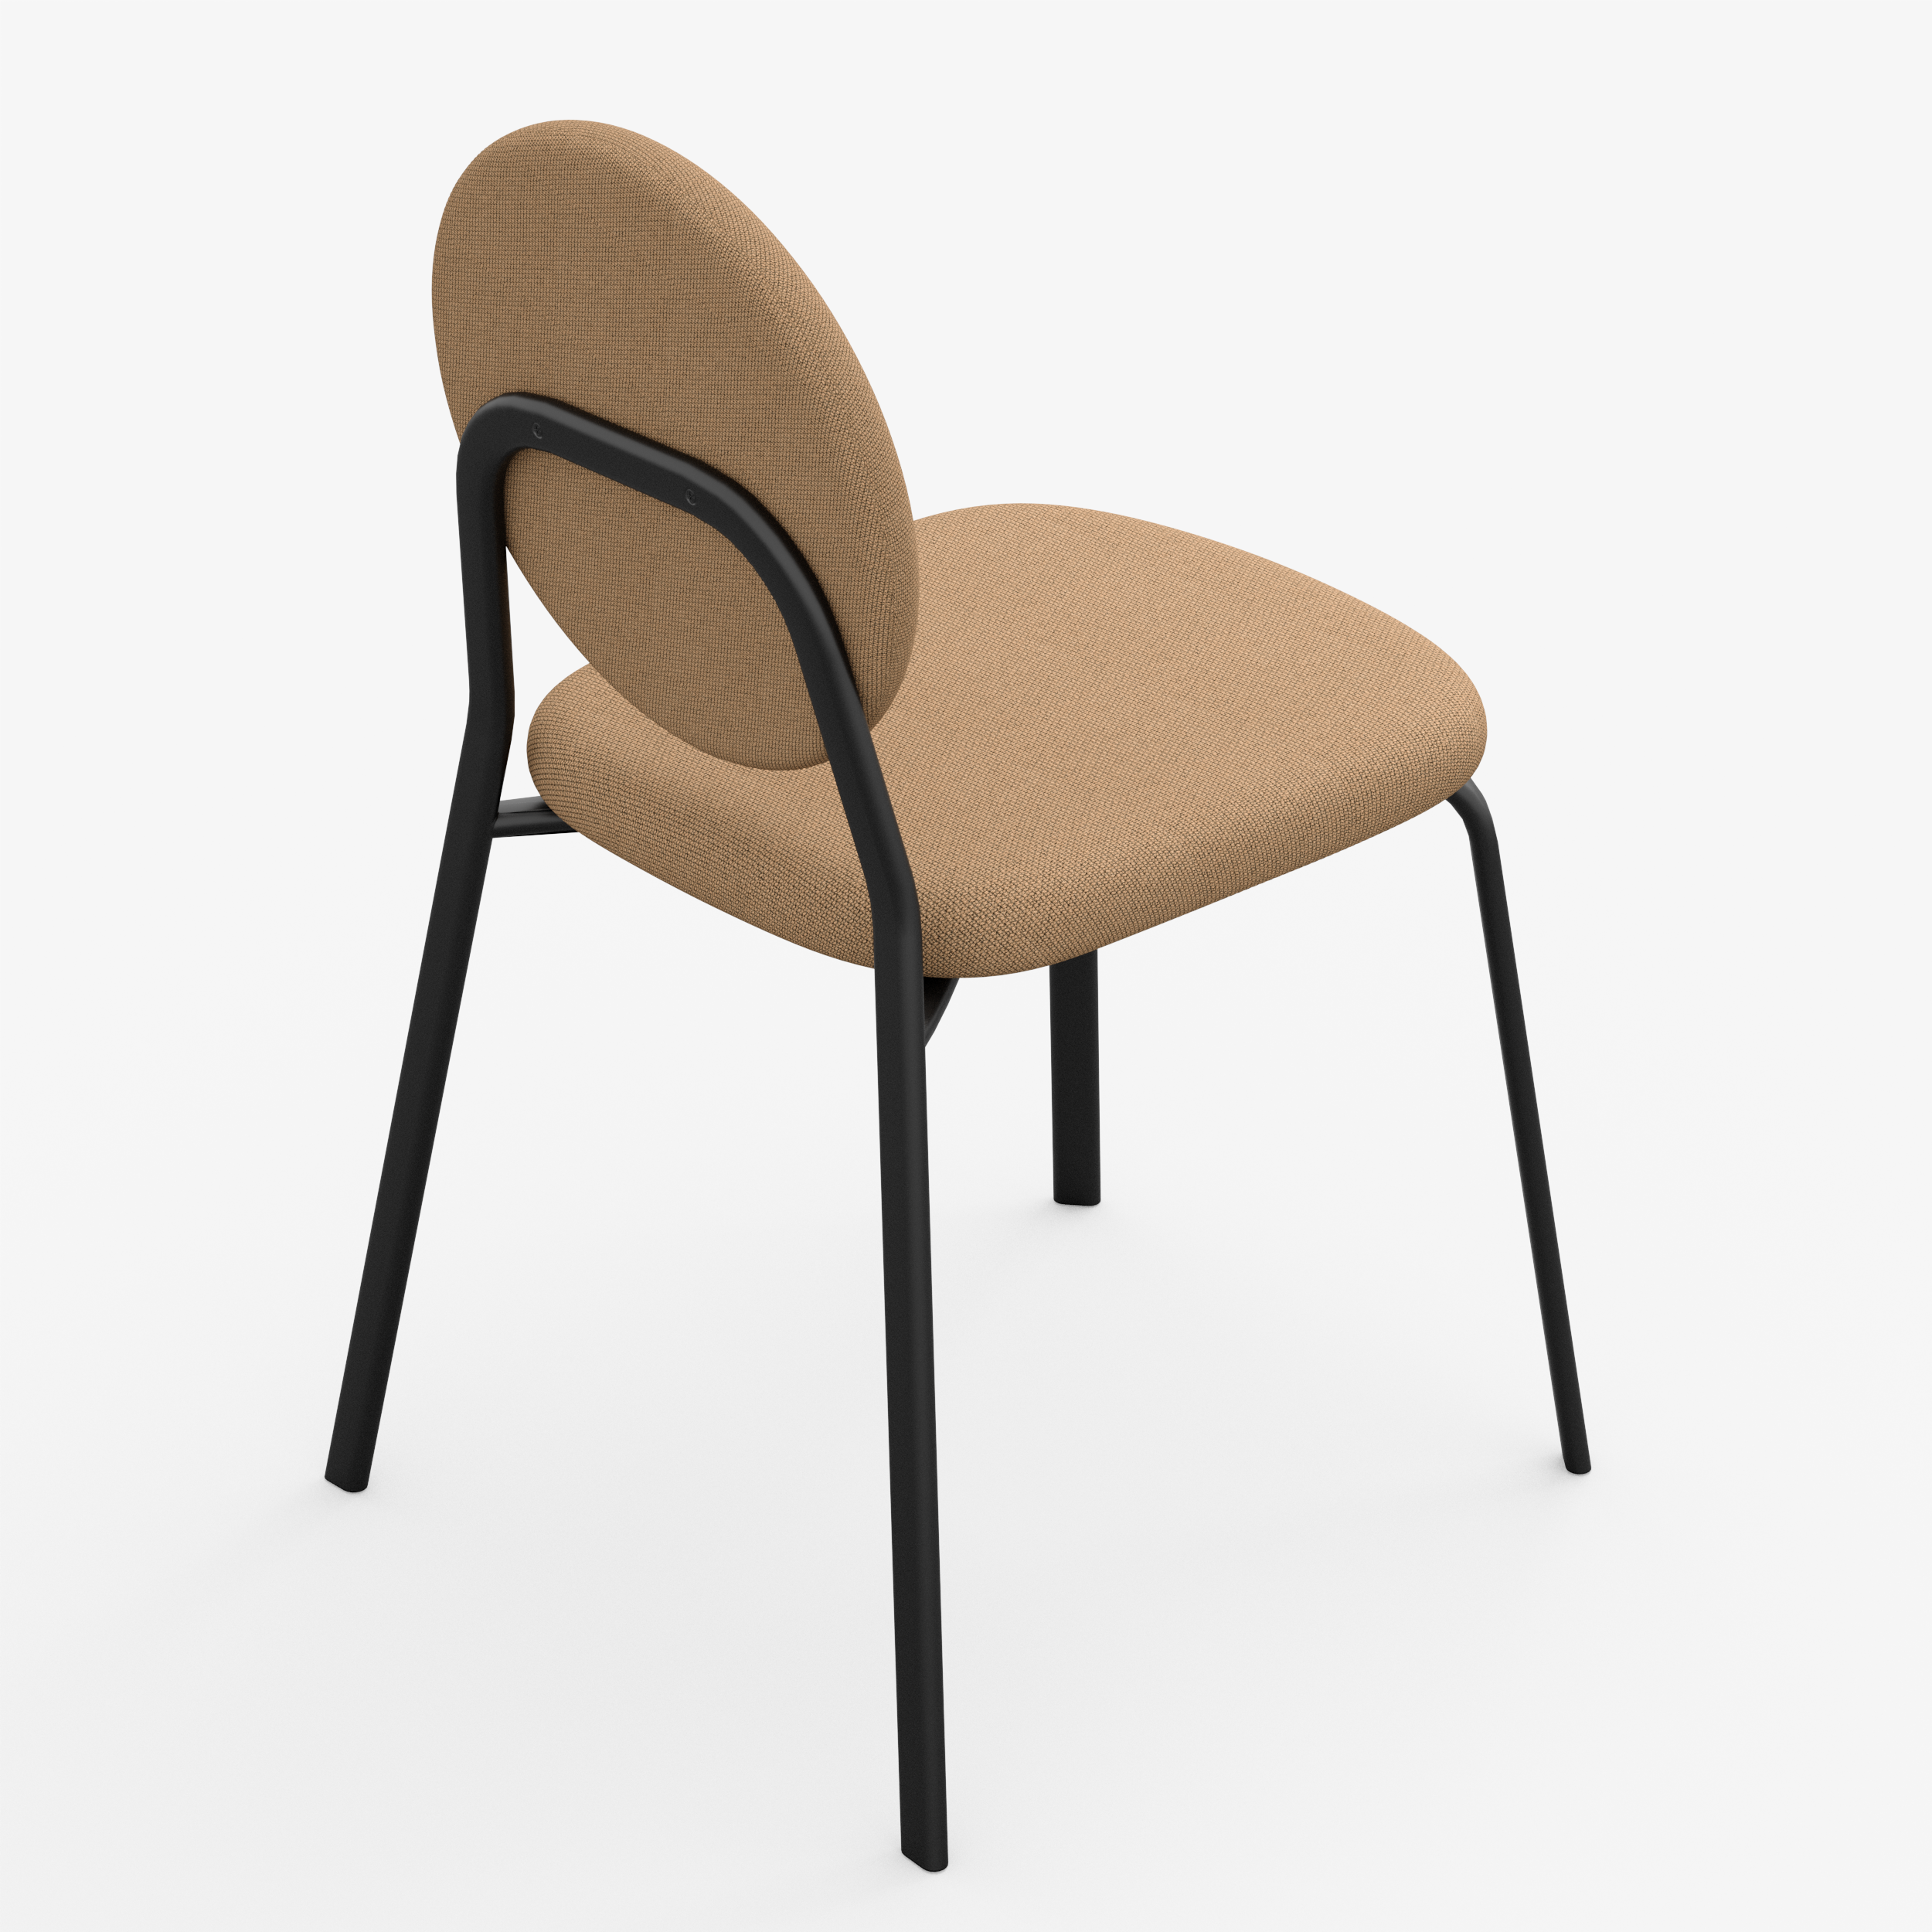 Form - Chair (Round, Persian Orange)